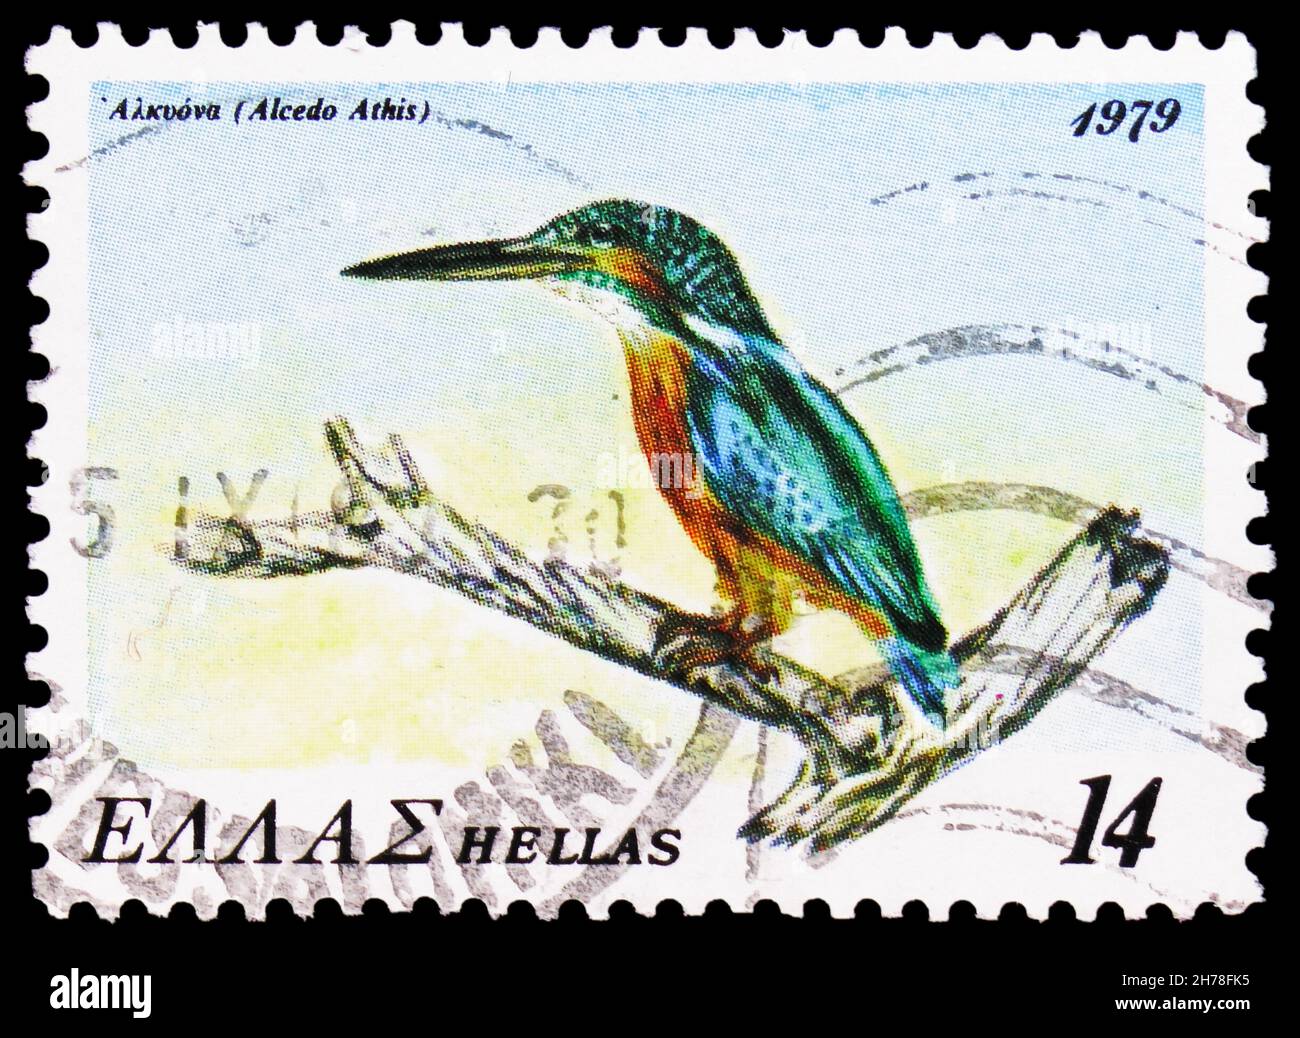 MOSCÚ, RUSIA - 25 DE OCTUBRE de 2021: Sello postal impreso en Grecia muestra Kingfisher Común (Alcedo athis), Serie de Aves en Peligro, alrededor de 1979 Foto de stock